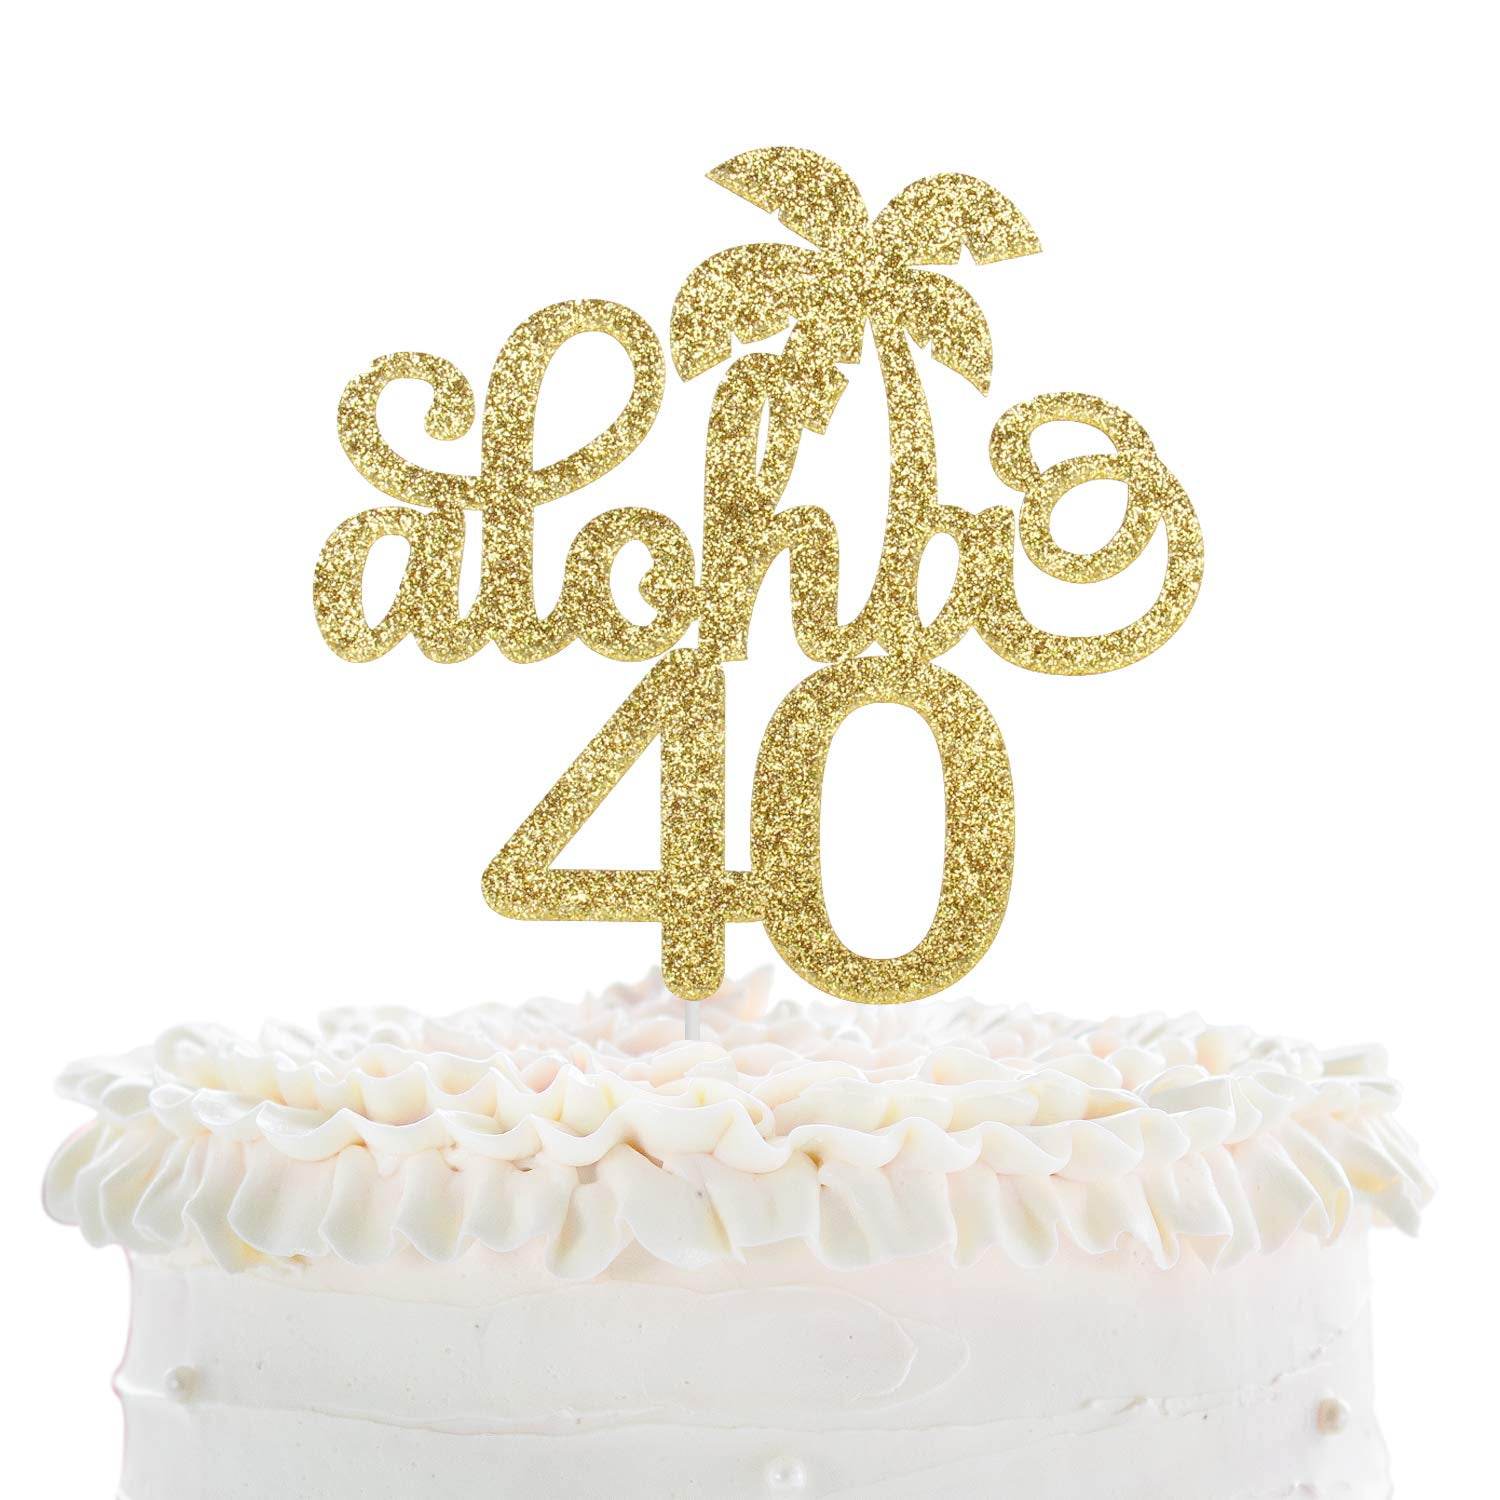 Aloha 40th Birthday Cake Topper Gold Glitter Forty Years Wedding Anniversary Supplies Slaying Dirty 40 Hawaii Tropical Party Coconut Tree Decoration Walmart Com Walmart Com